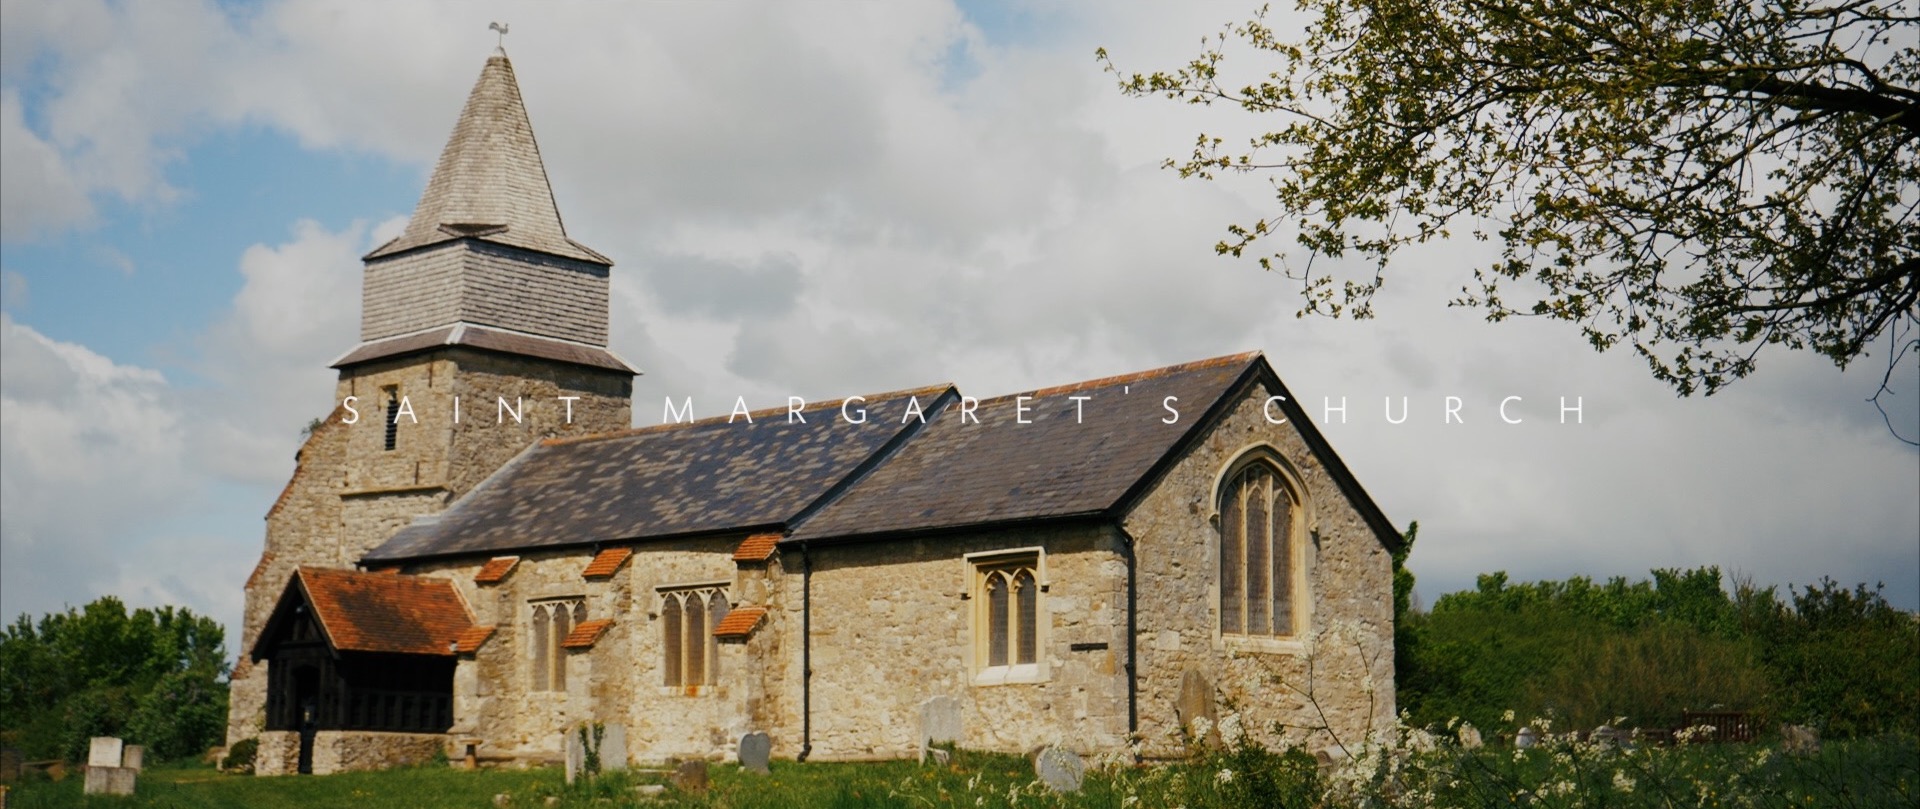 Saint Margaret's Church Pitsea Essex.jpg